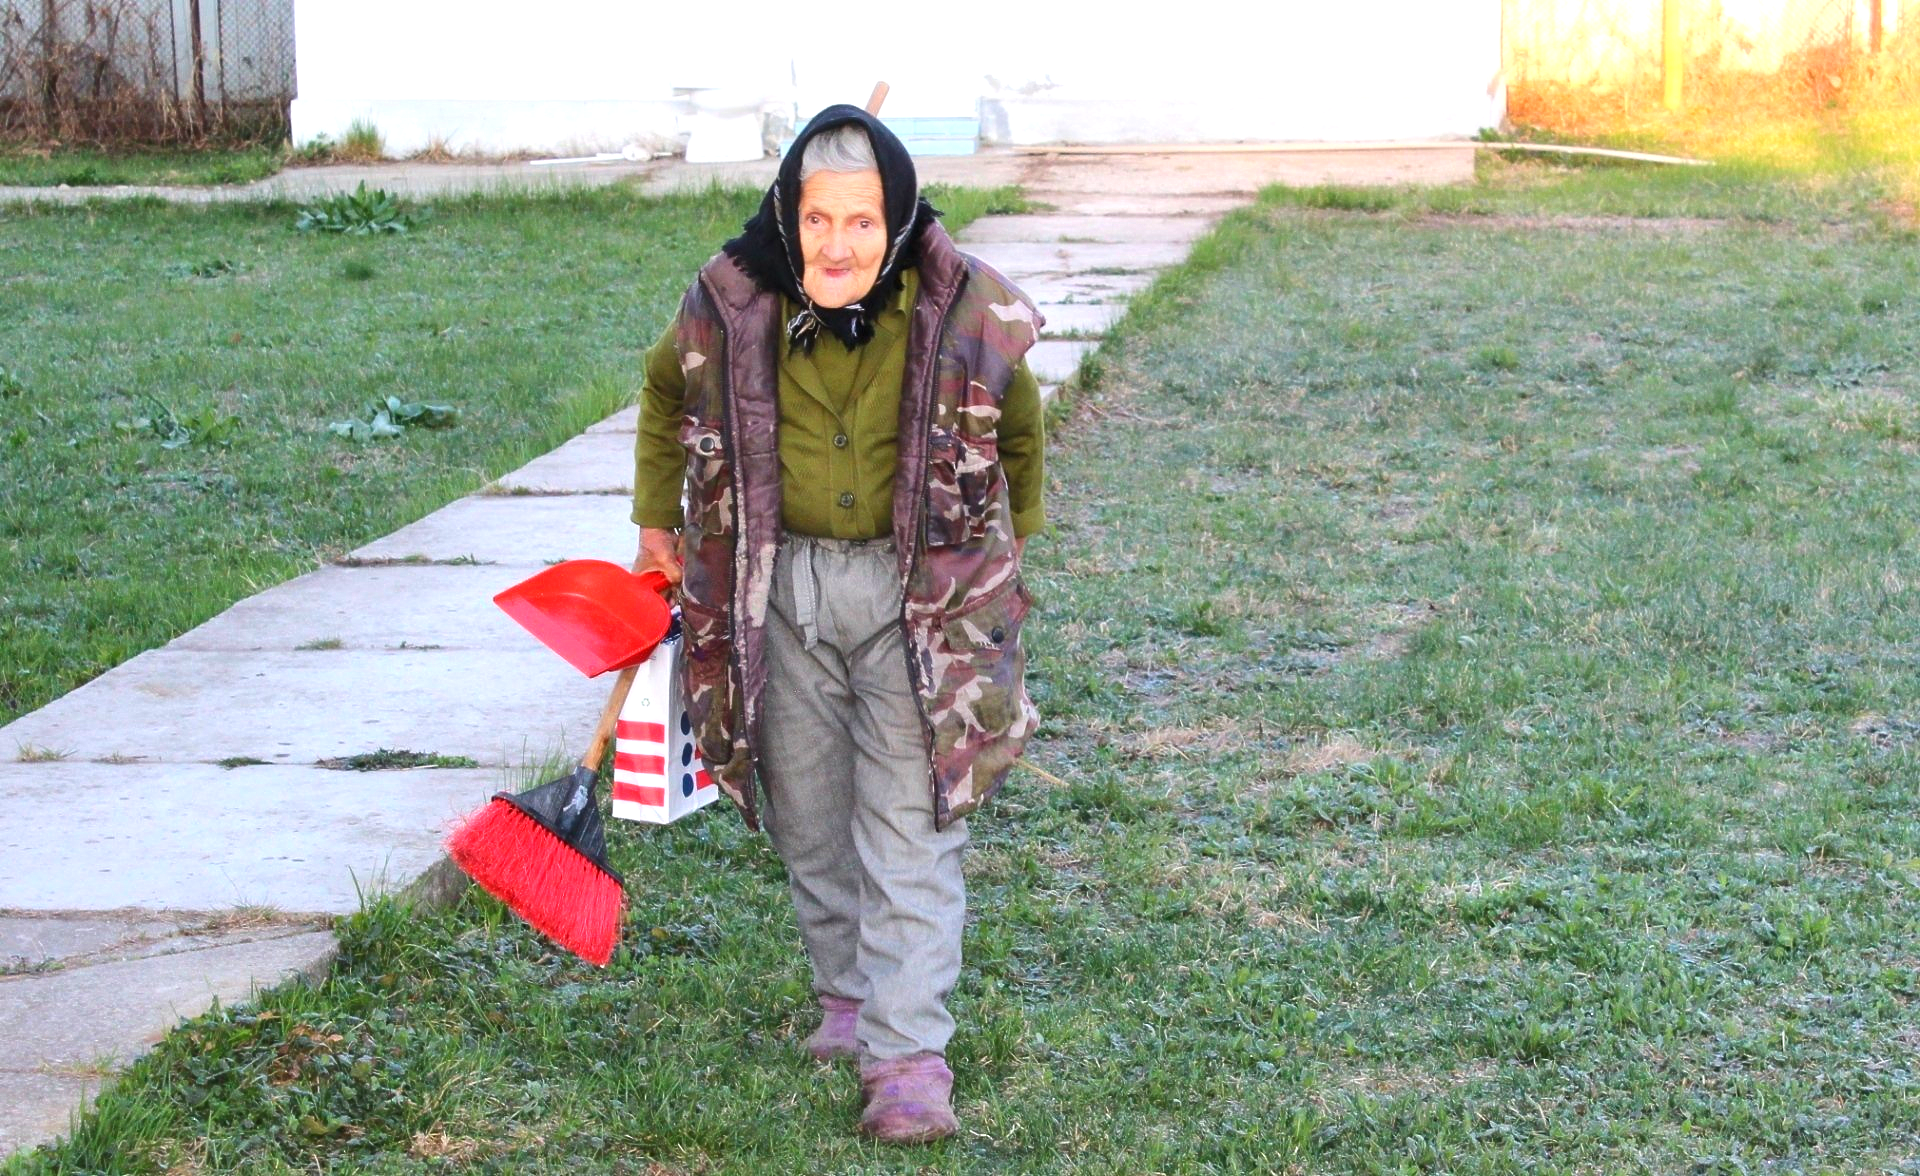 
Oldest Working Cleaning Lady: world record set by Sofia Chiţoran aka Grandma Sofia